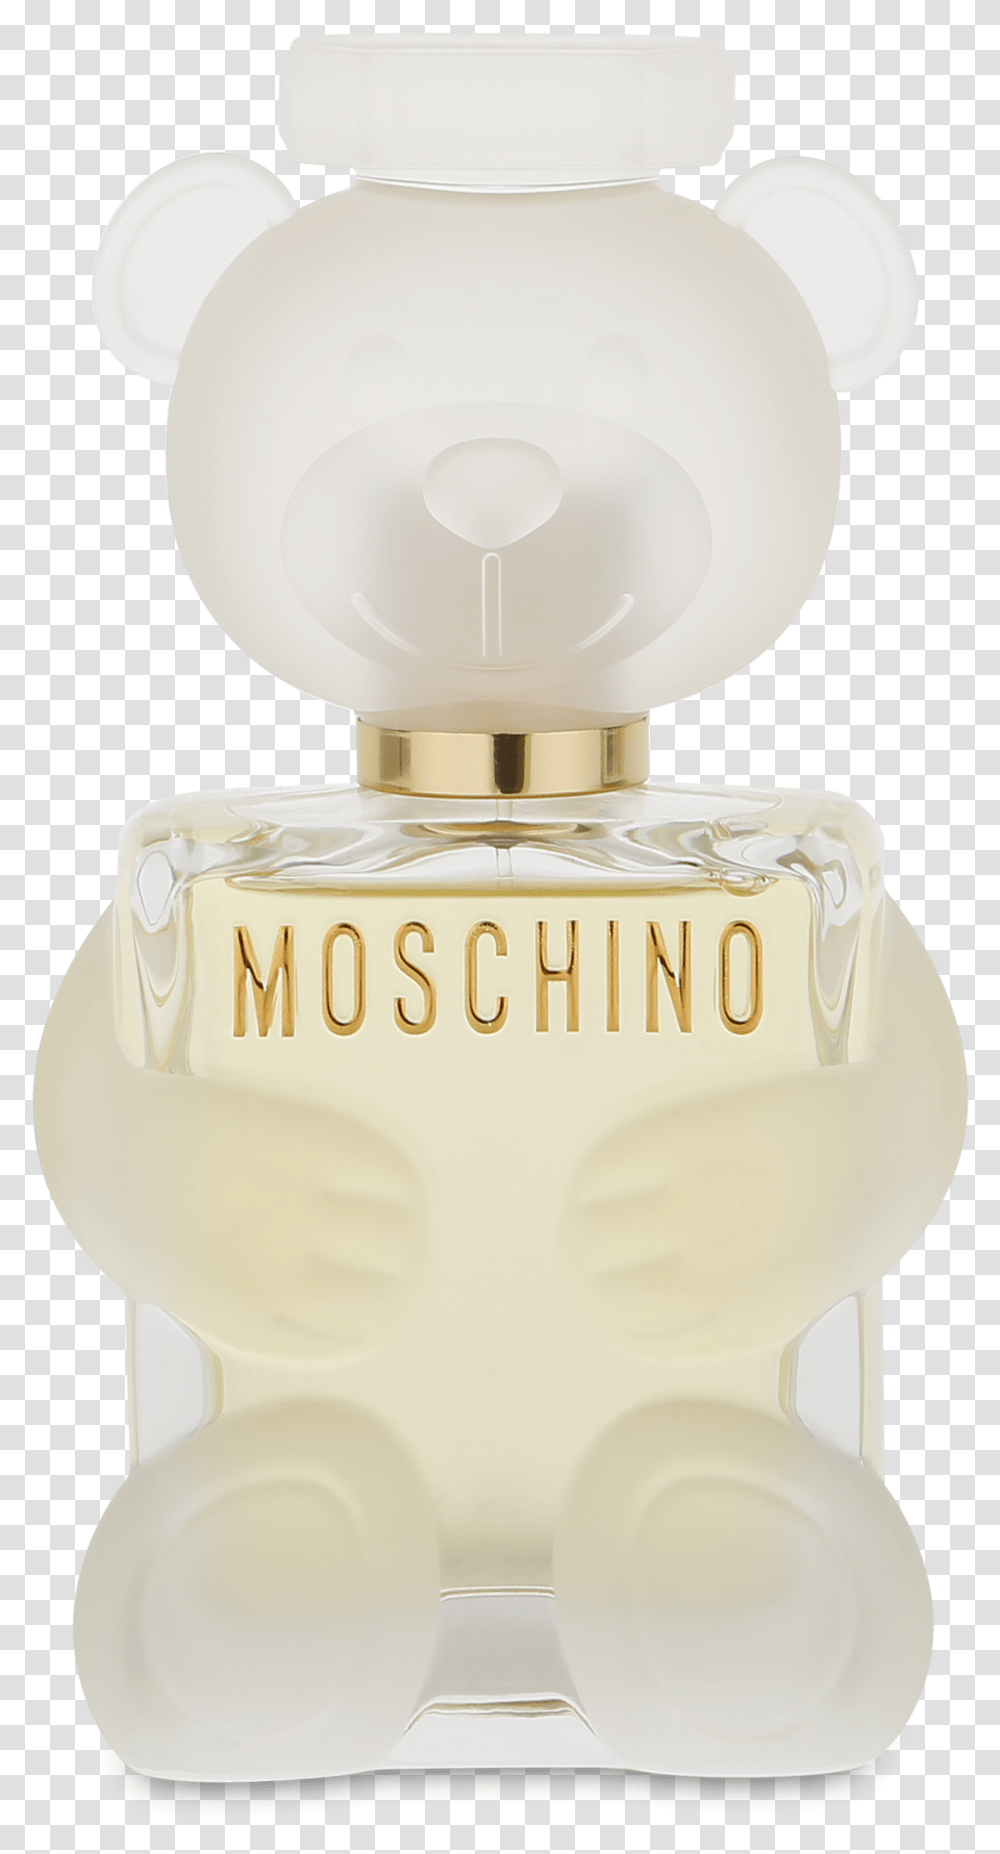 Moschino Toy, Bottle, Perfume, Cosmetics, Wedding Cake Transparent Png